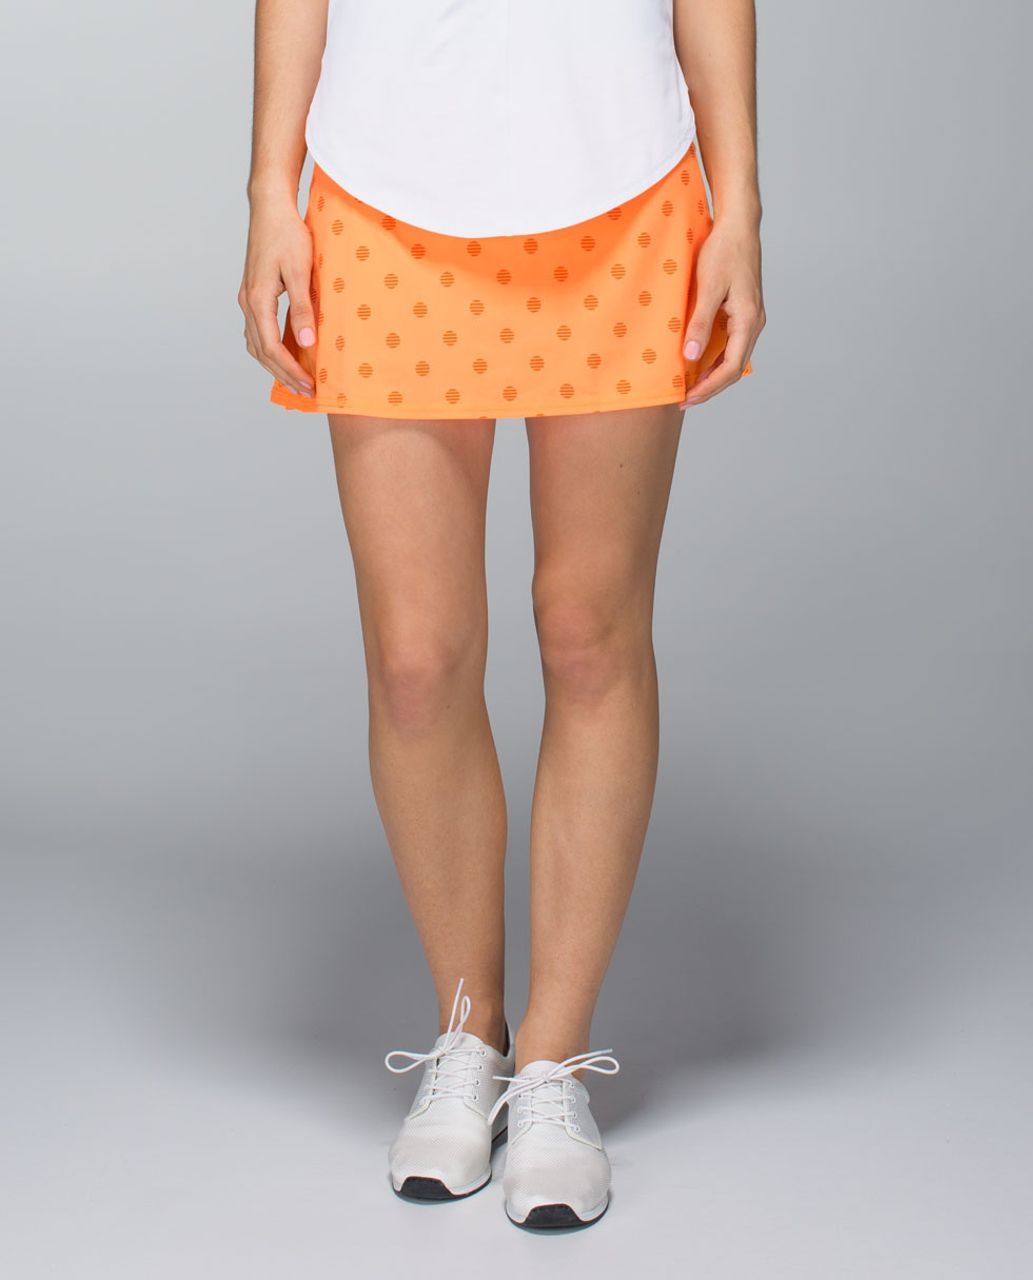 Lululemon Run:  Pace Setter Skirt (Regular) *4-way Stretch - Stripe Dot Printed Creamsicle Pop / Creamsicle Pop